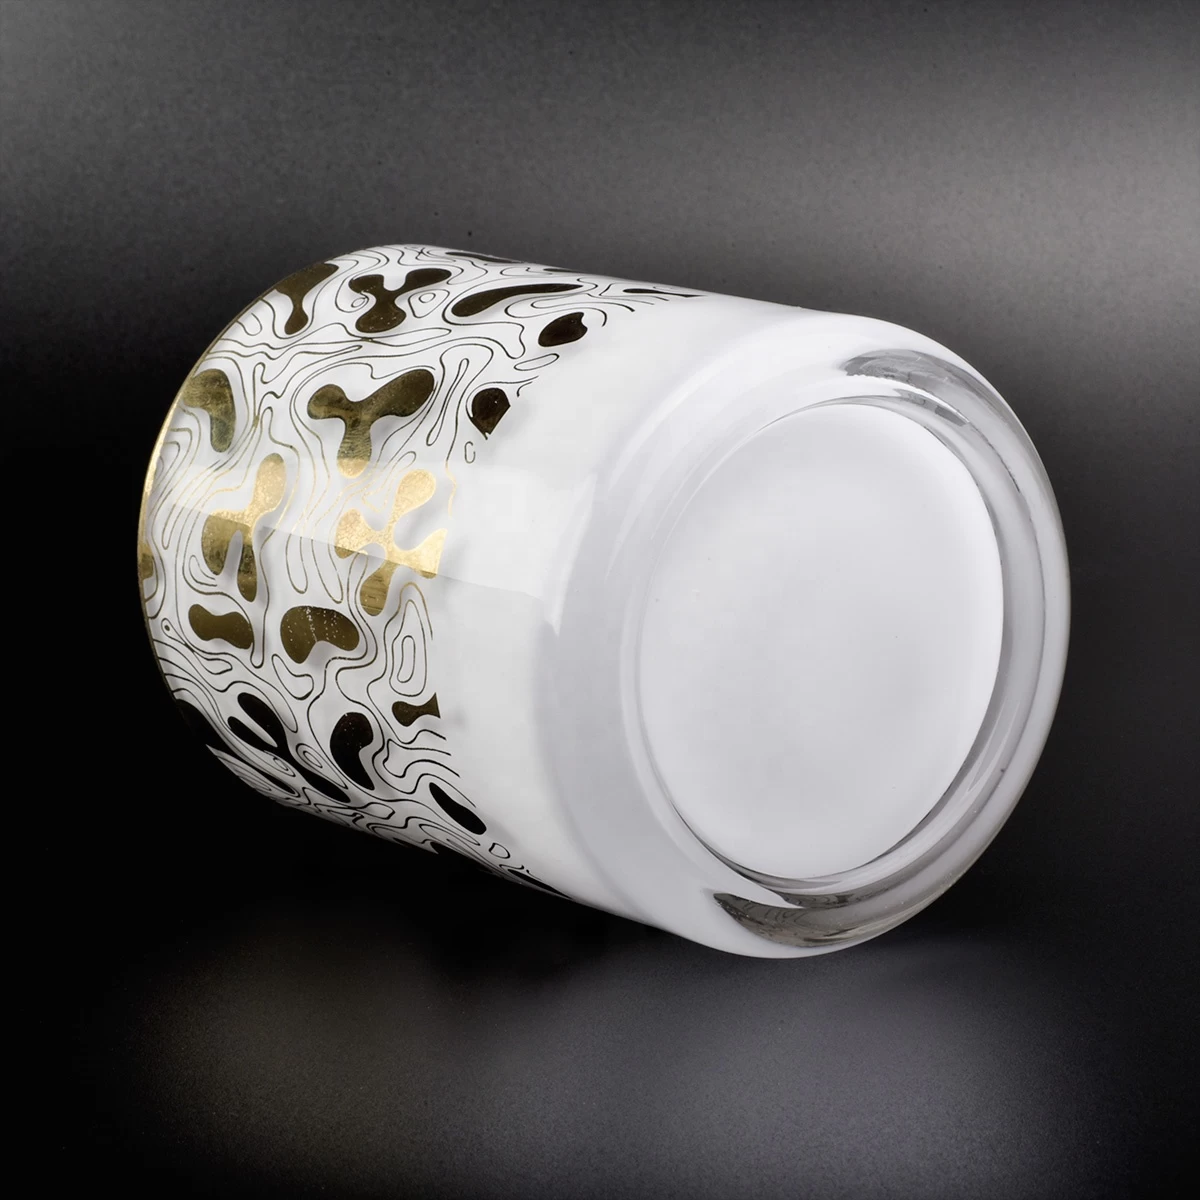 Hot sales custom logo white luxury glass candle holder